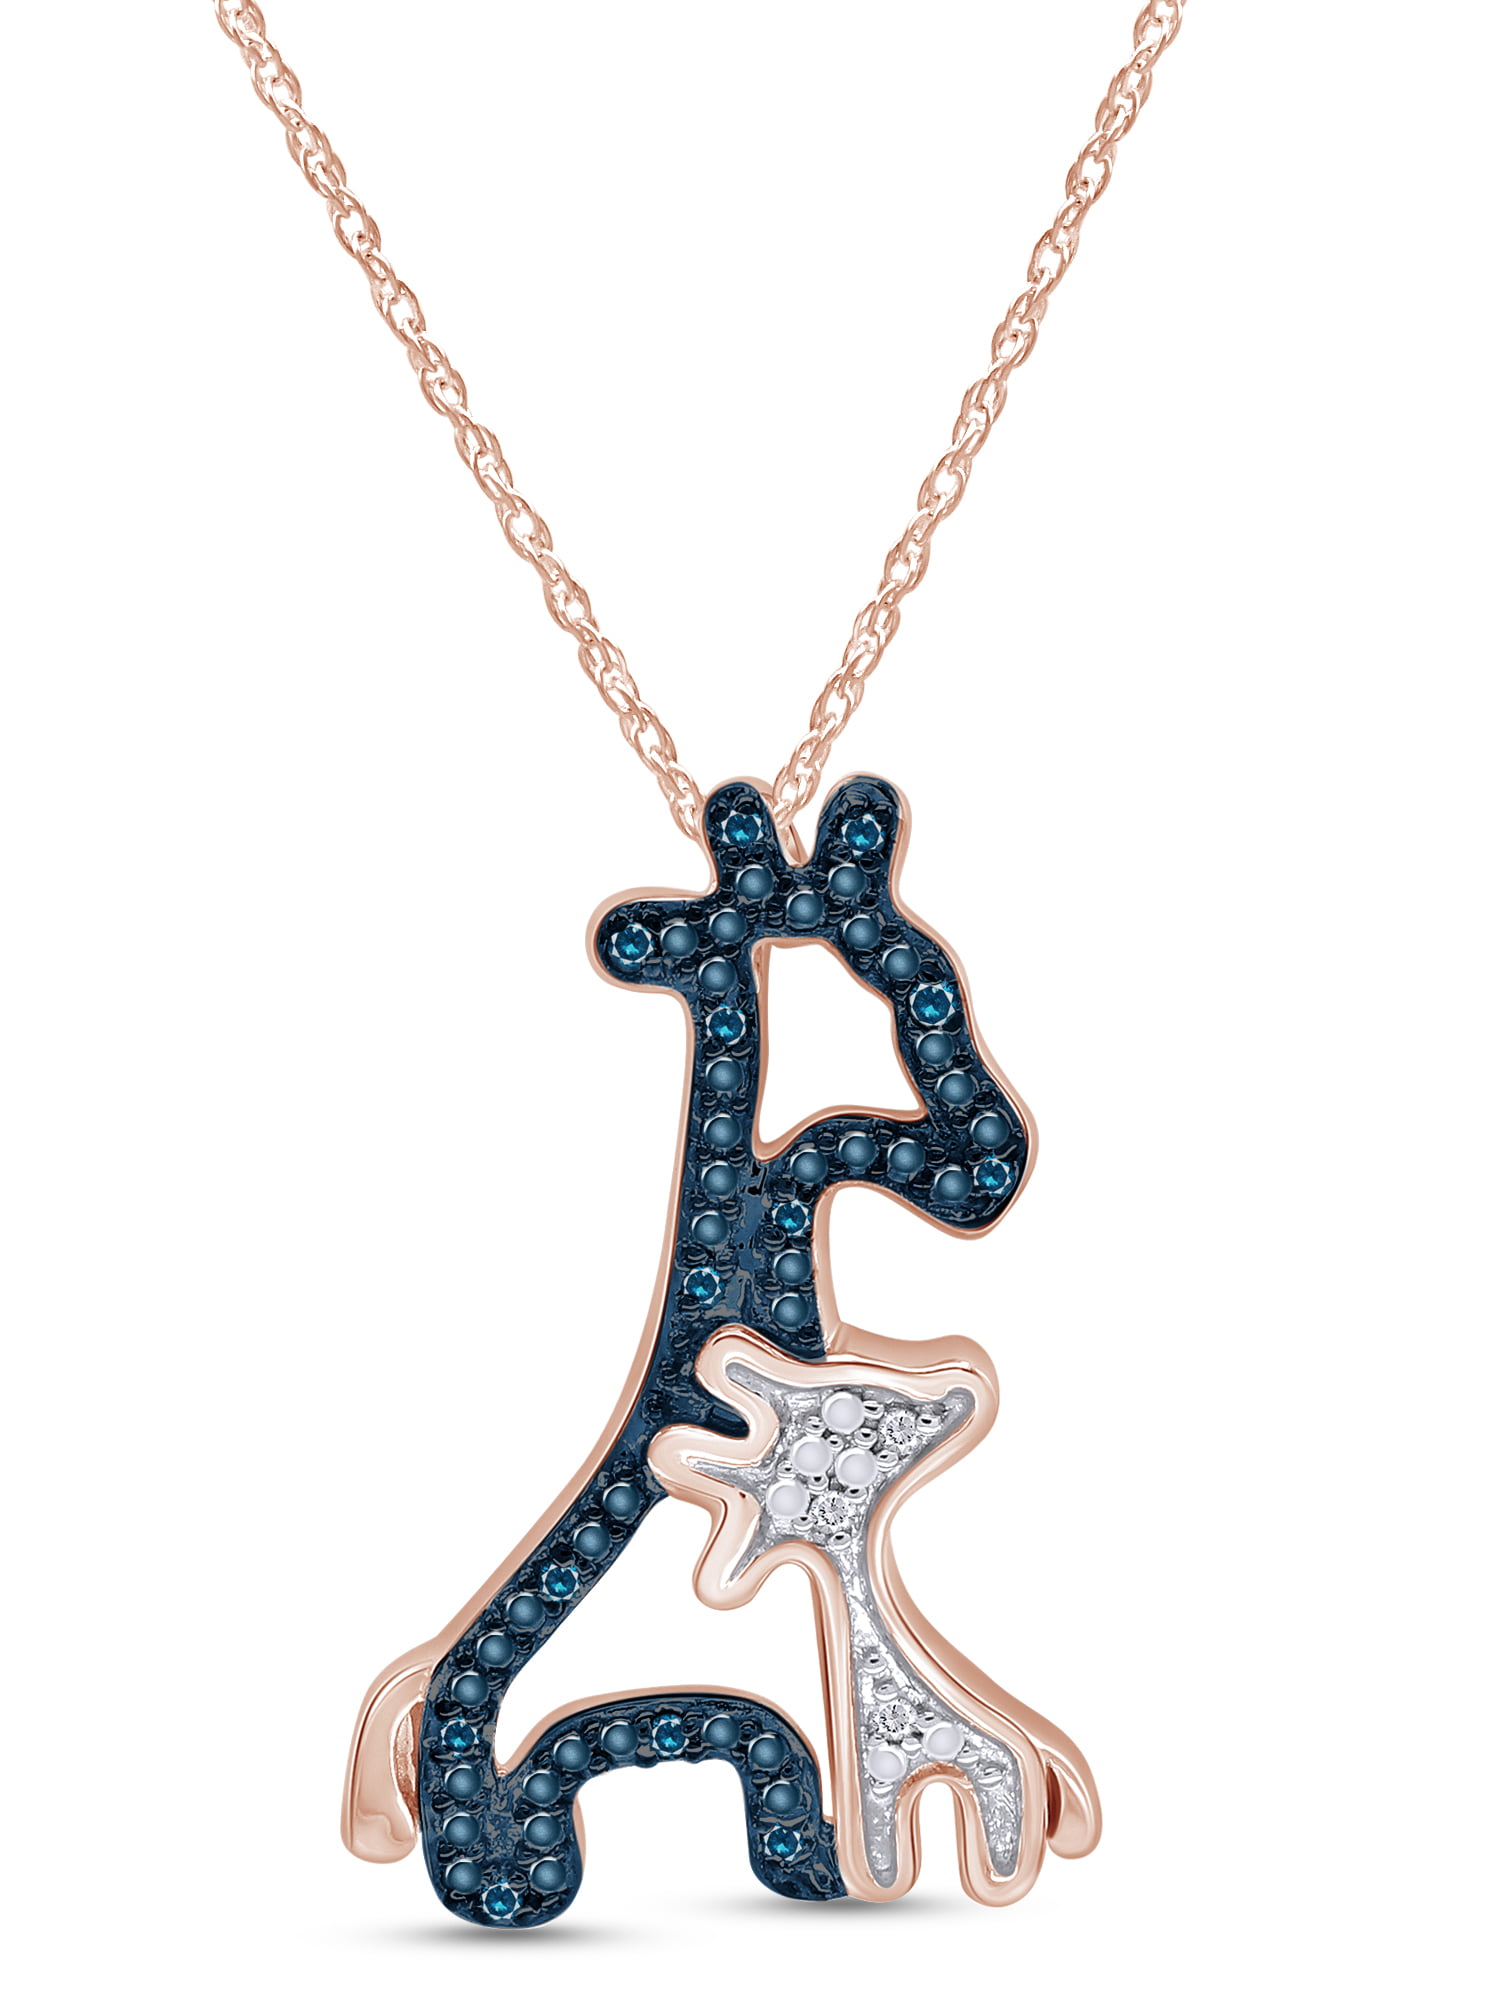 Silver Giraffe Necklace Giraffes Animals Adjustable Chain Pendant Present Gift